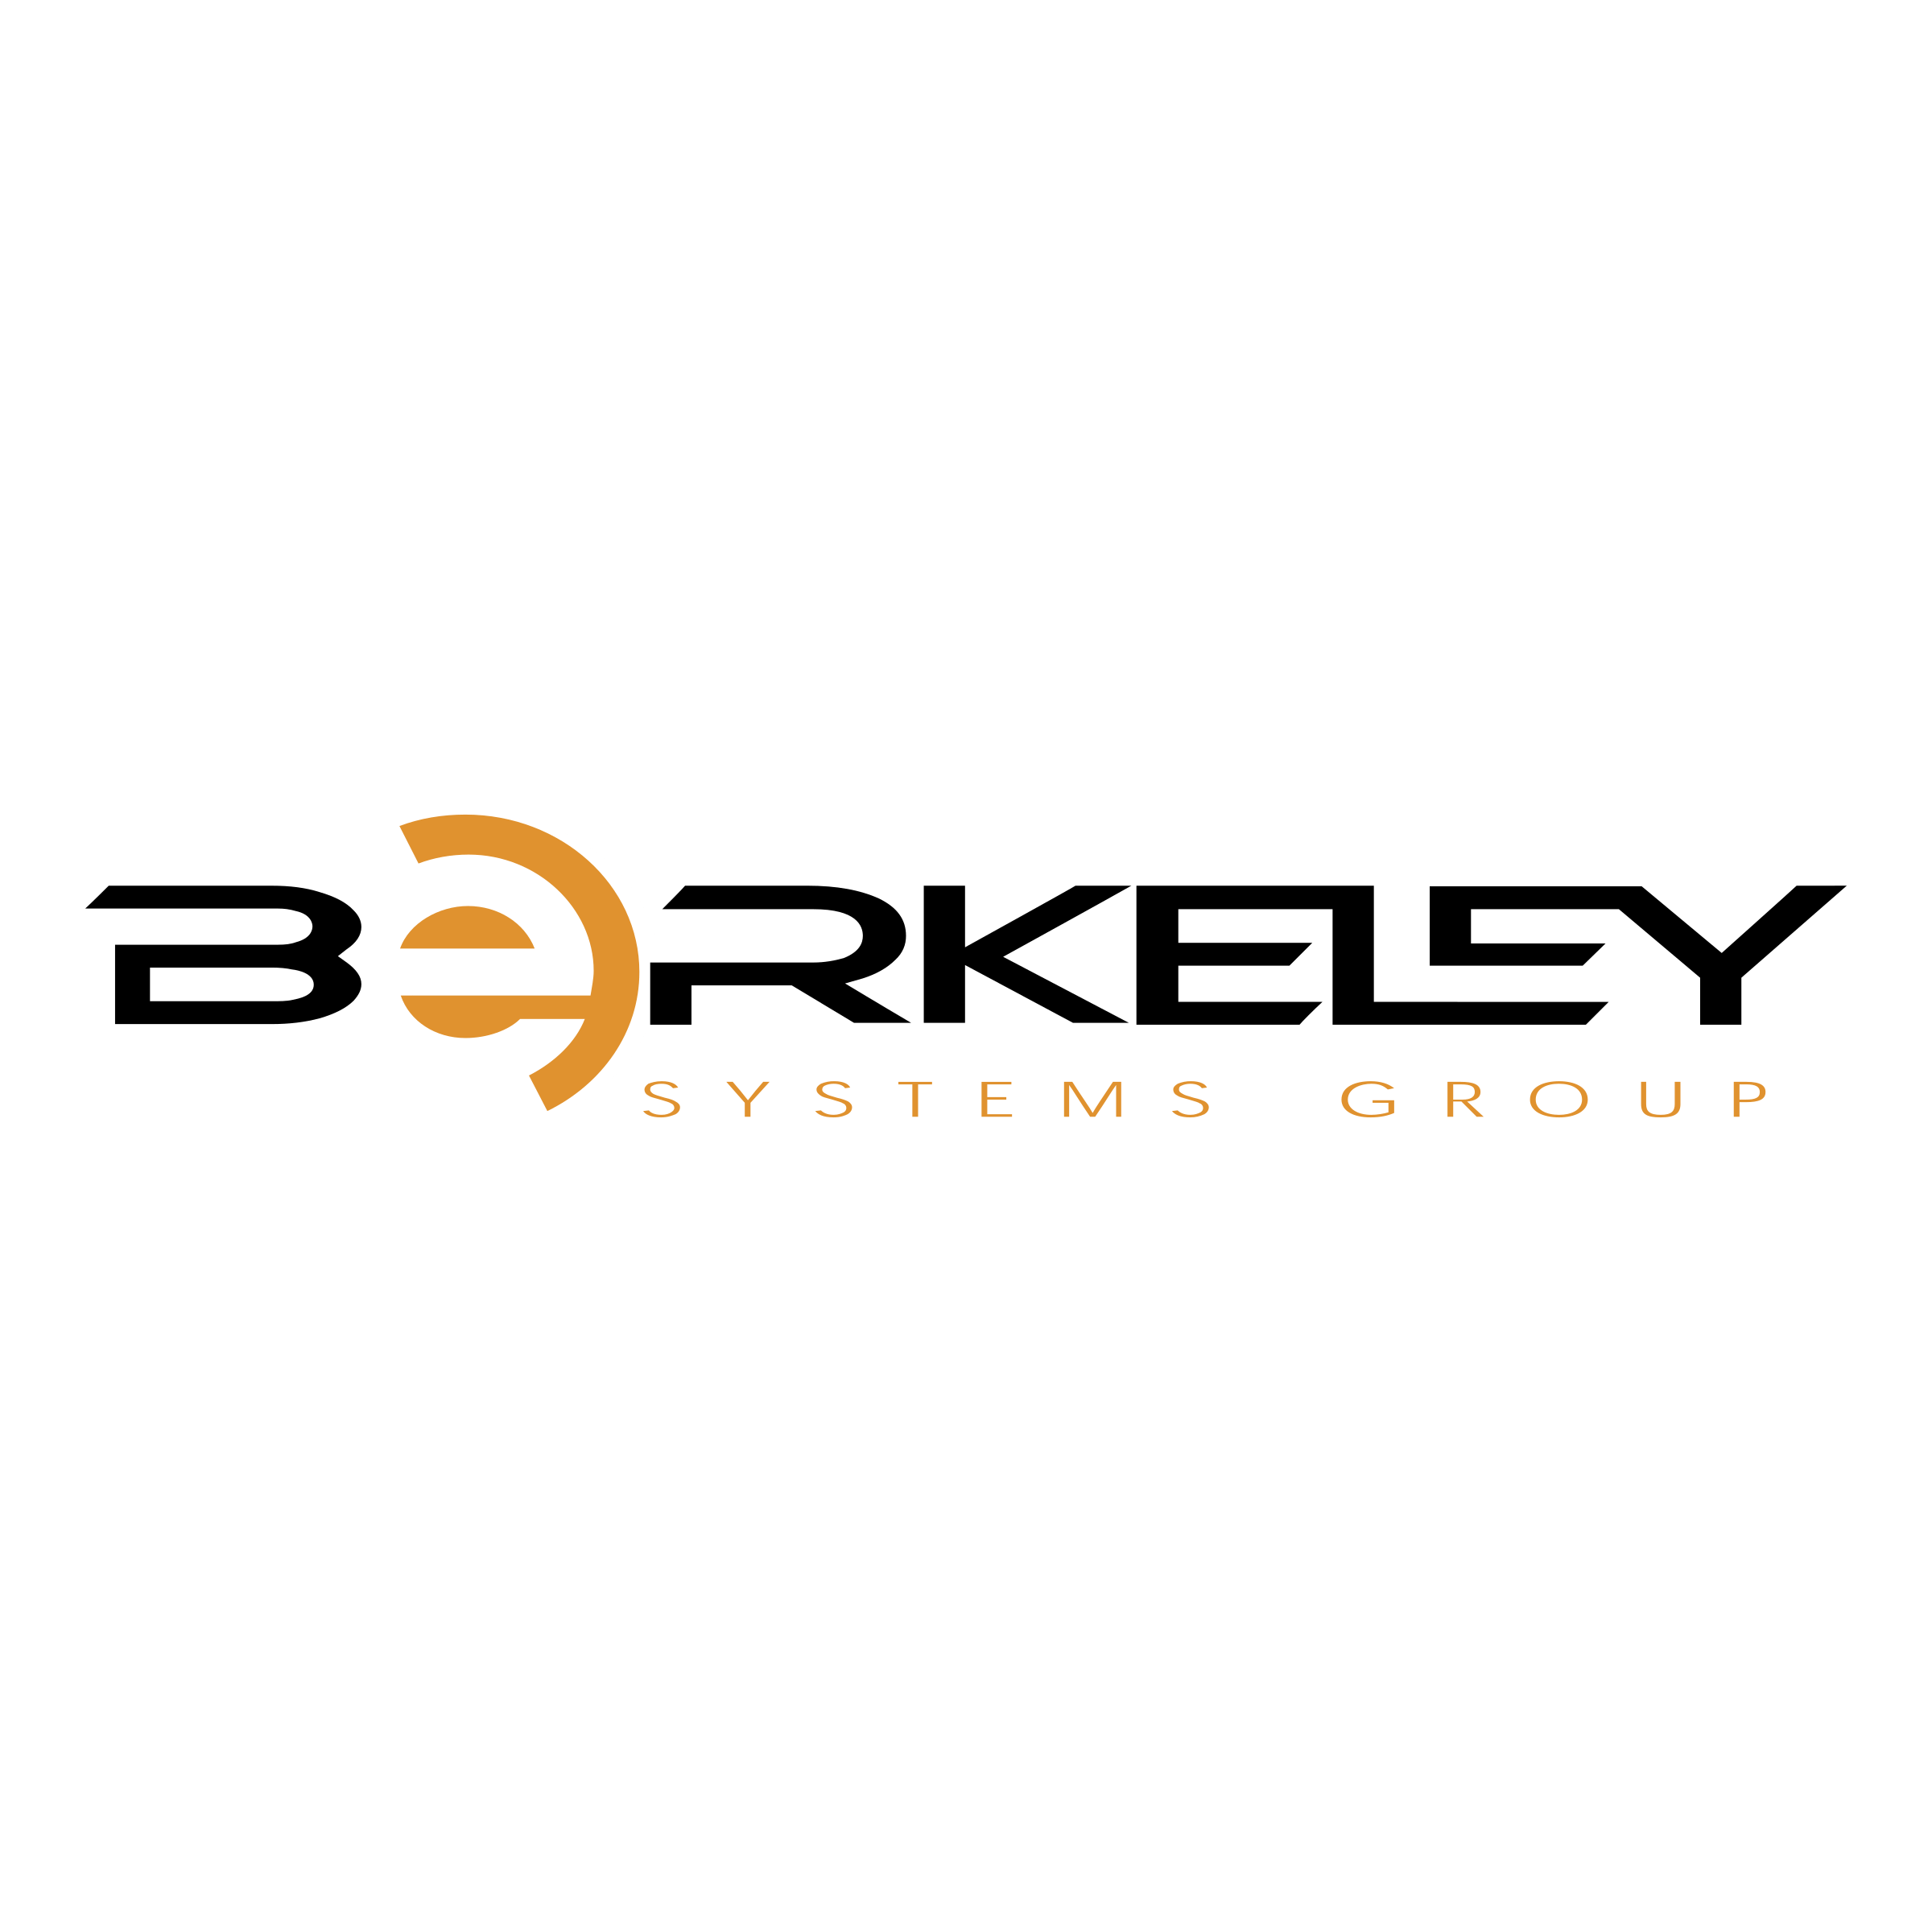 Berkeley Logo - Berkeley Logo PNG Transparent & SVG Vector - Freebie Supply